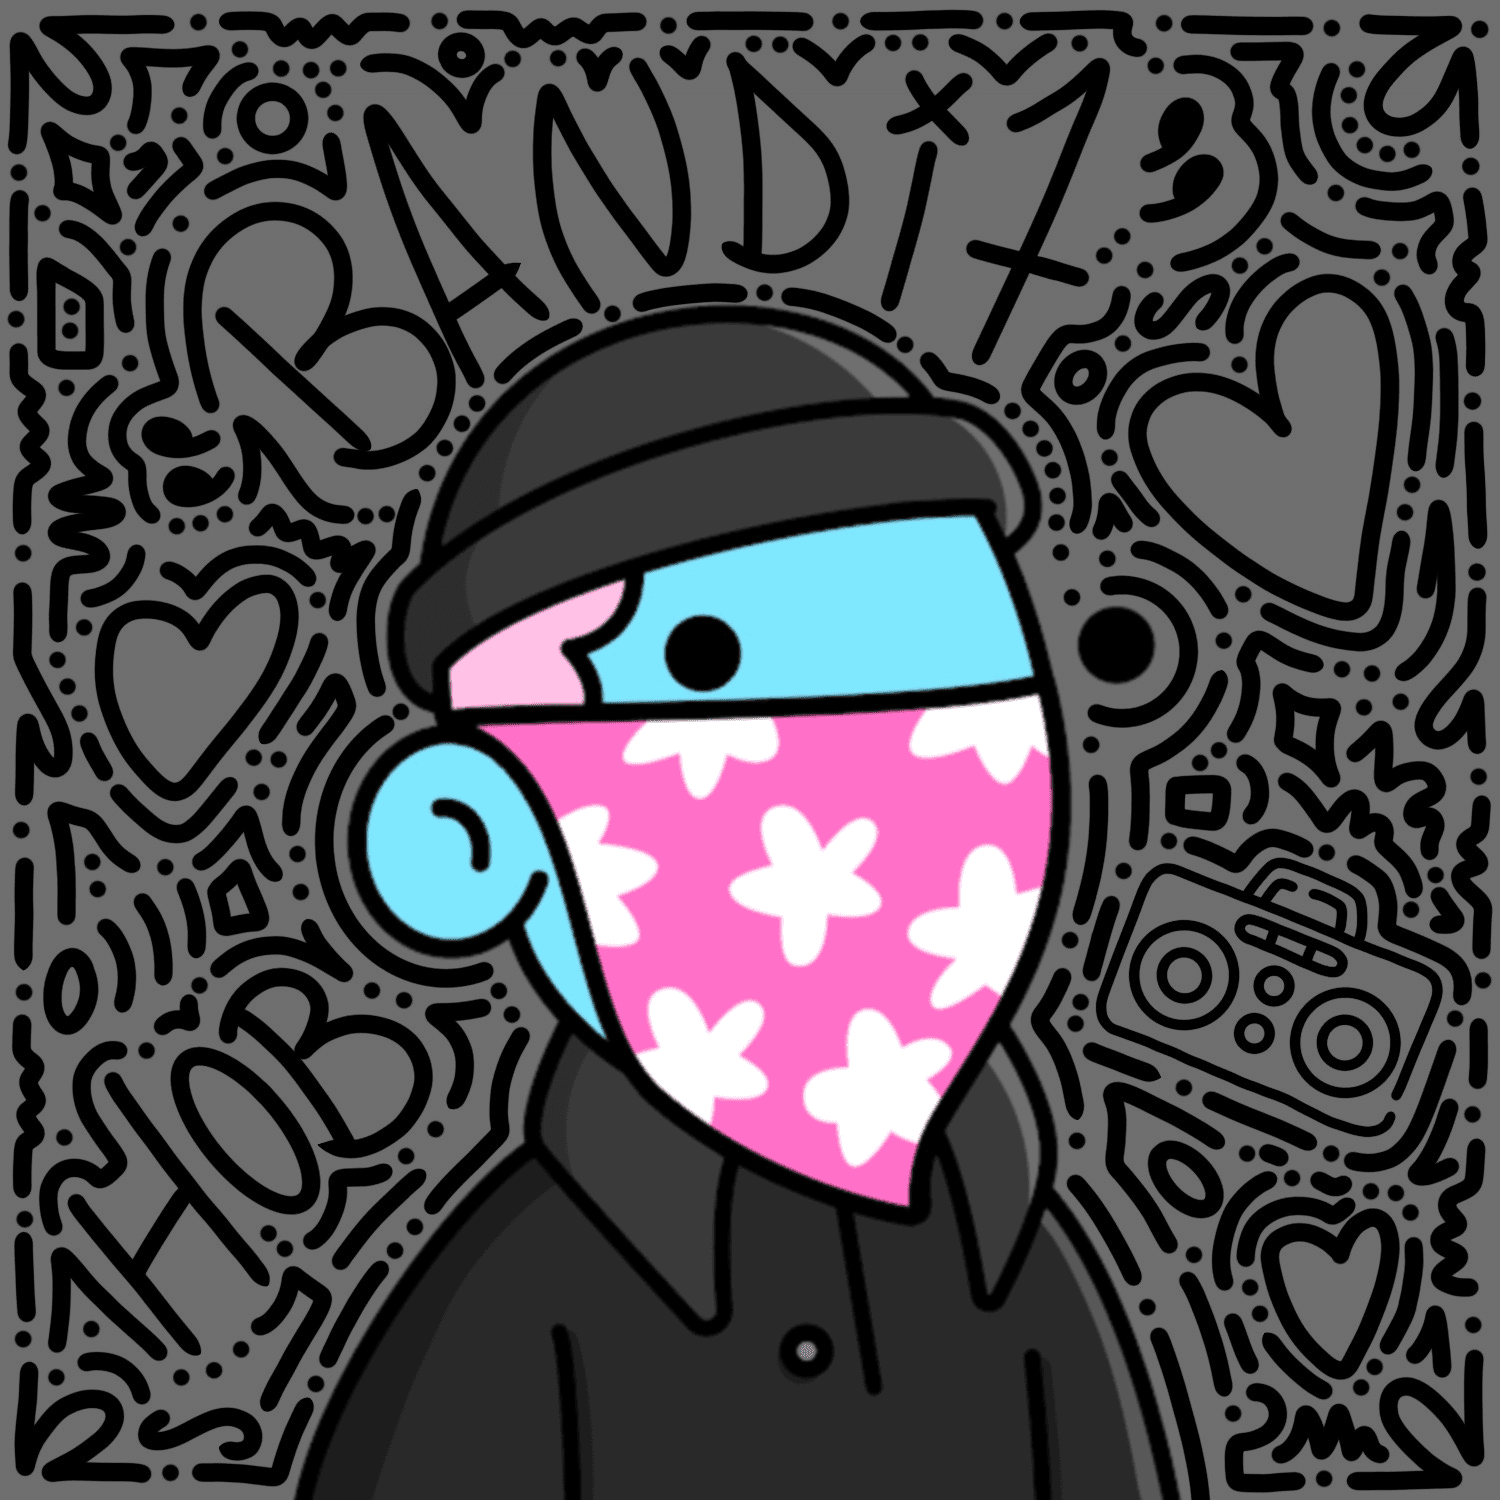 Bandit 2.0